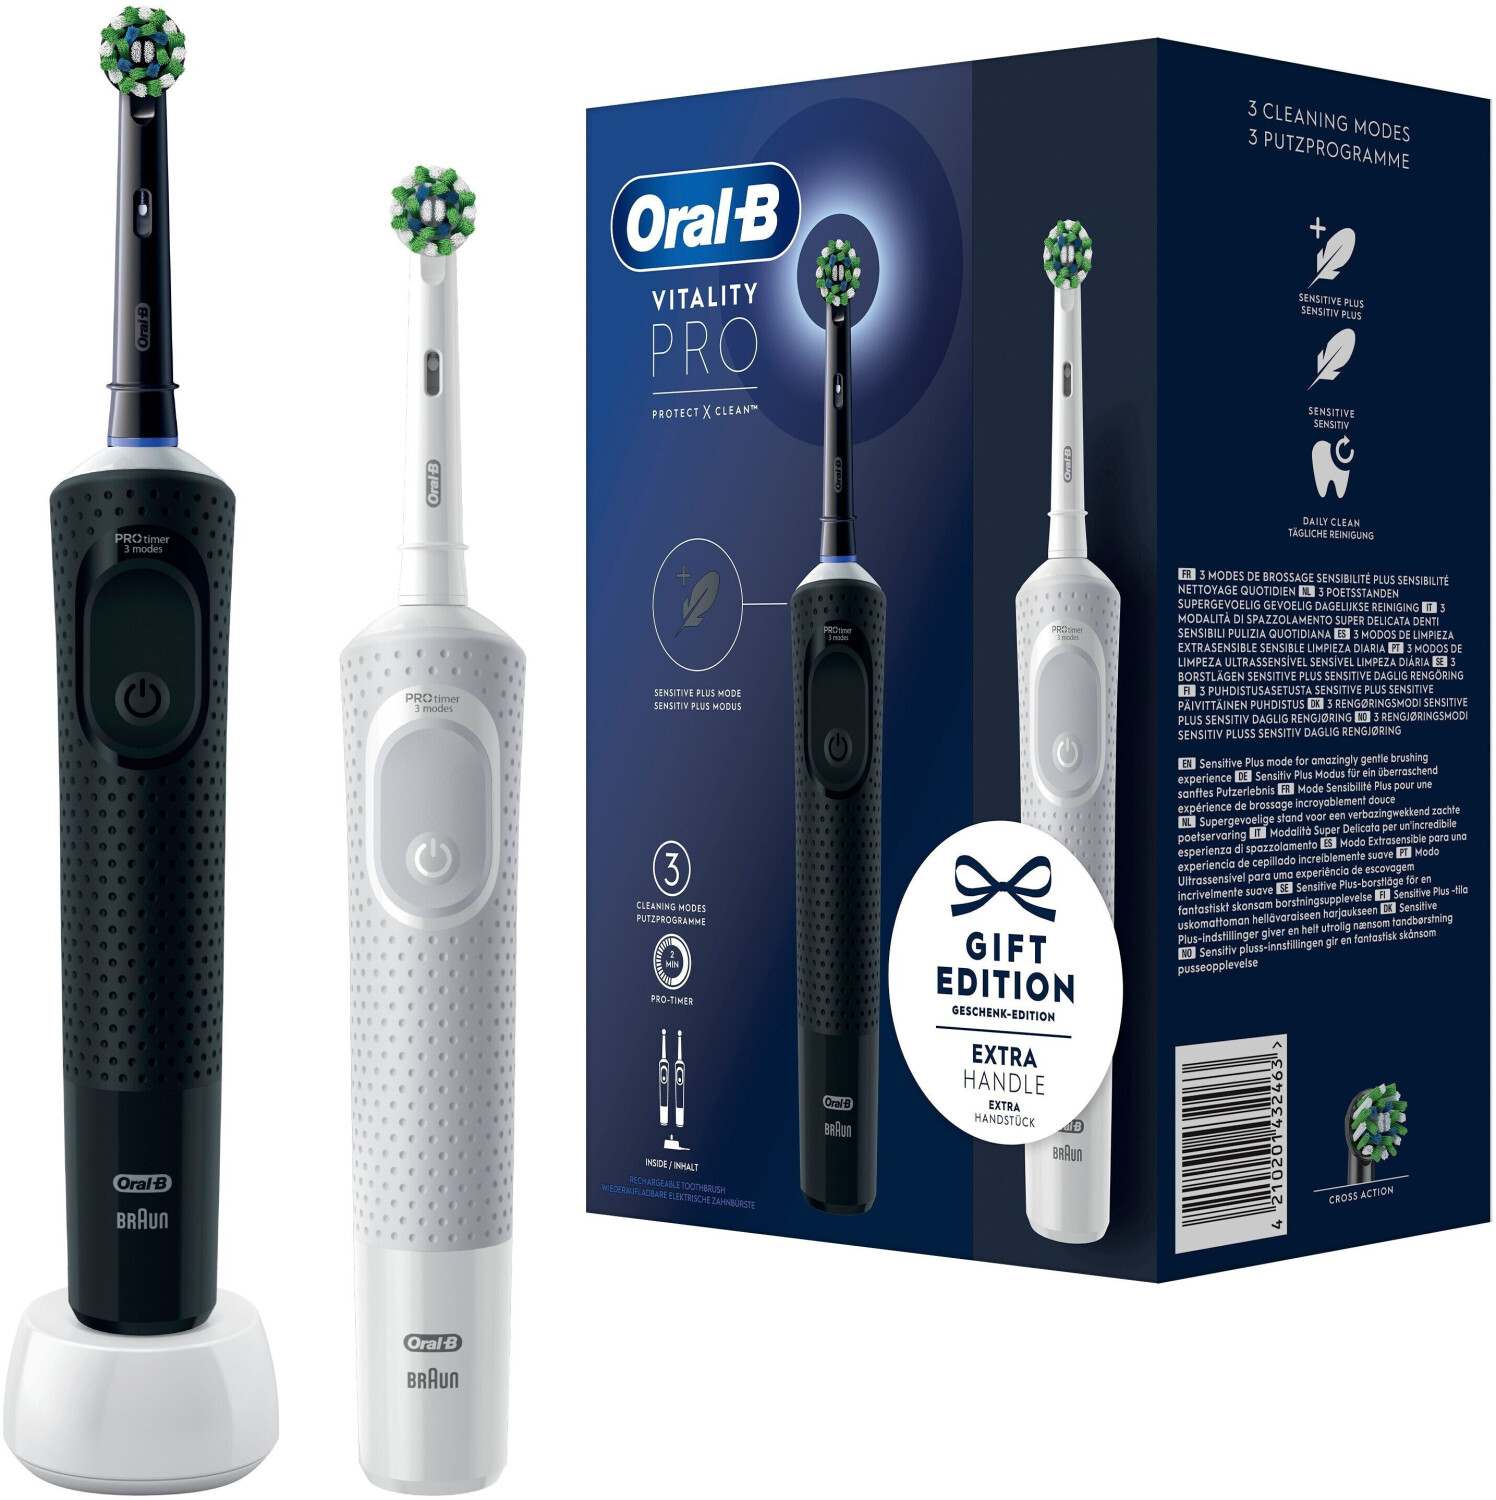 ORAL B Vitality Pro Electric Toothbrush - Black & Purple Duo